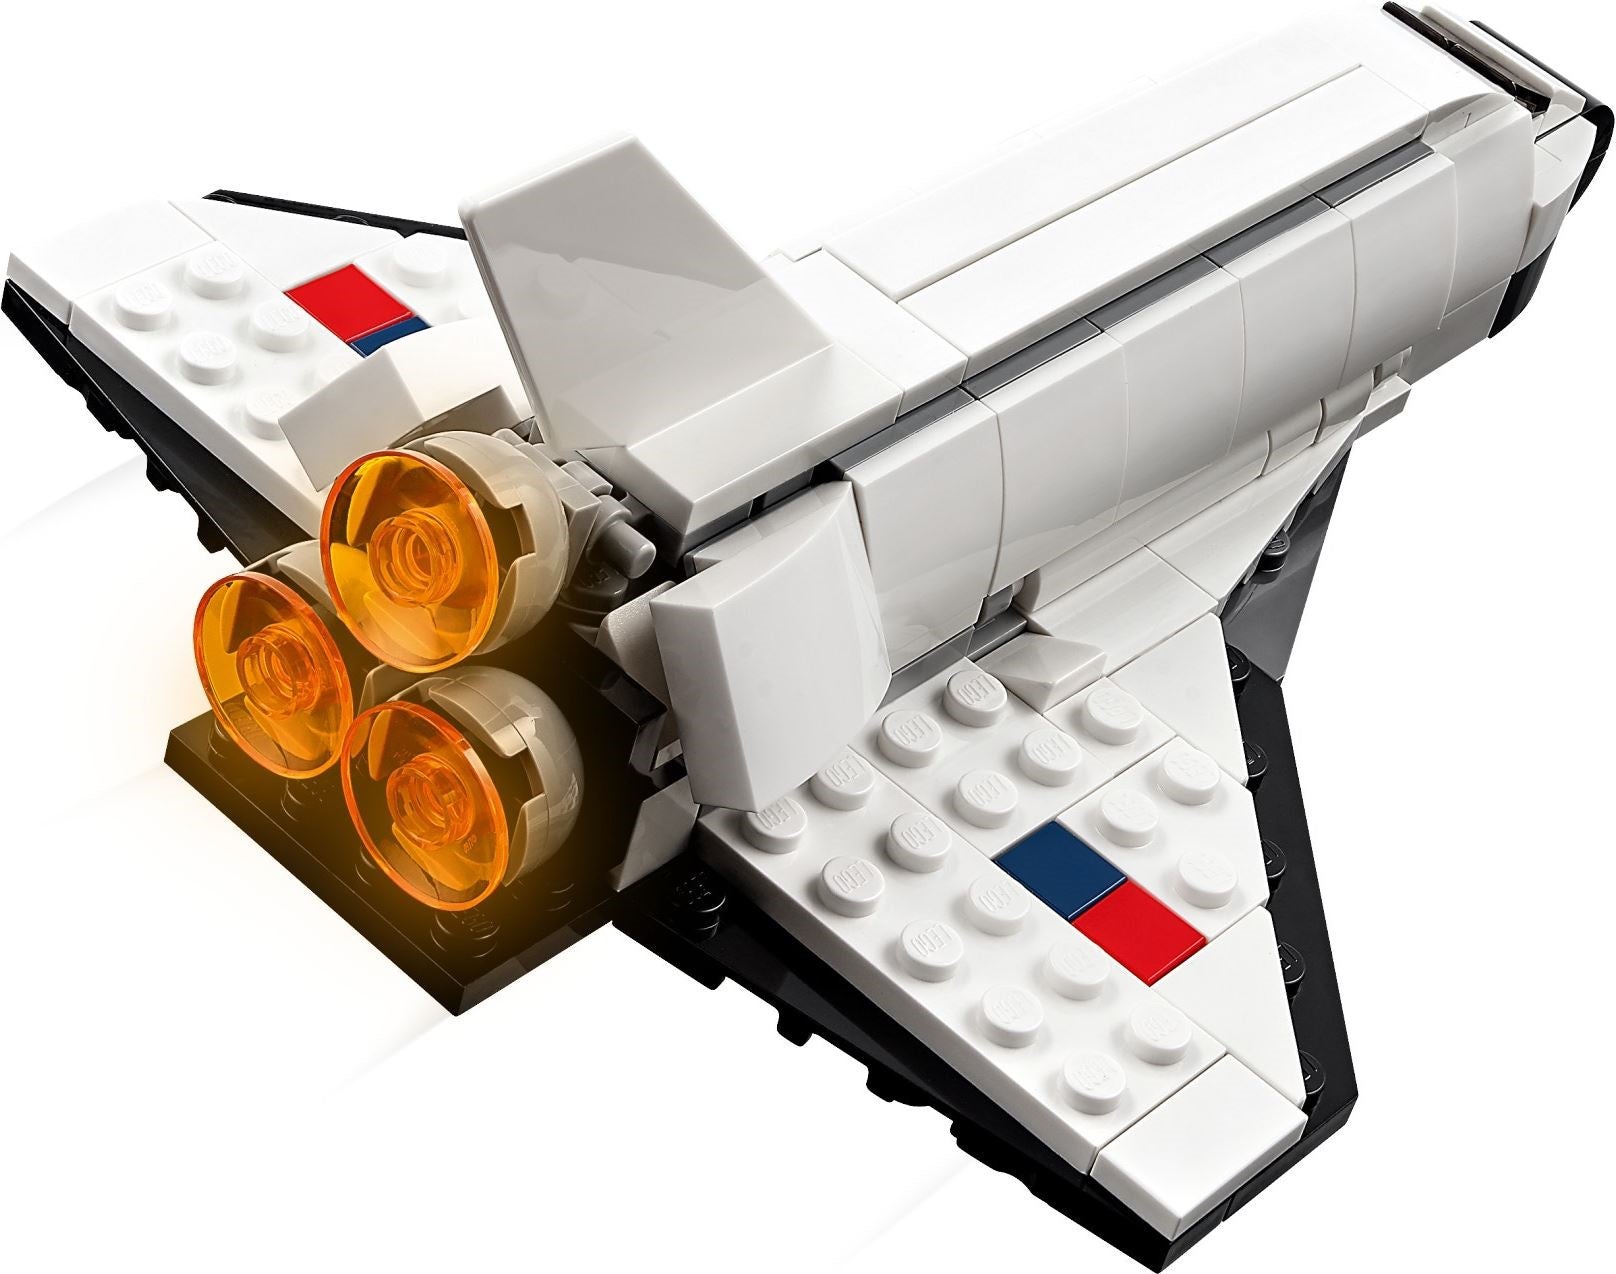 LEGO Creator 31134 Avaruusalus